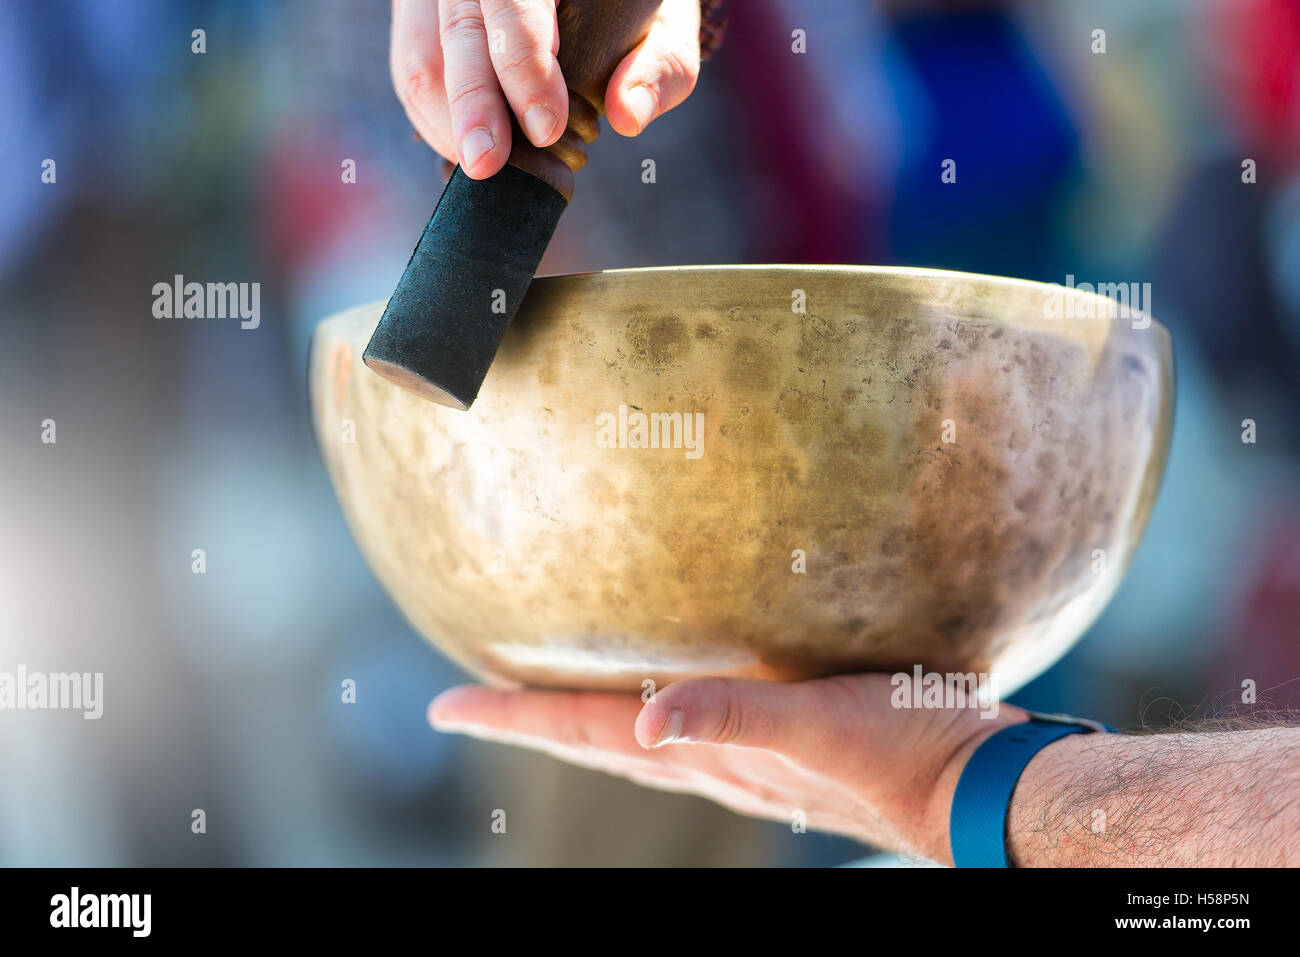 Giocare all'aperto campana tibetana in strada Foto Stock